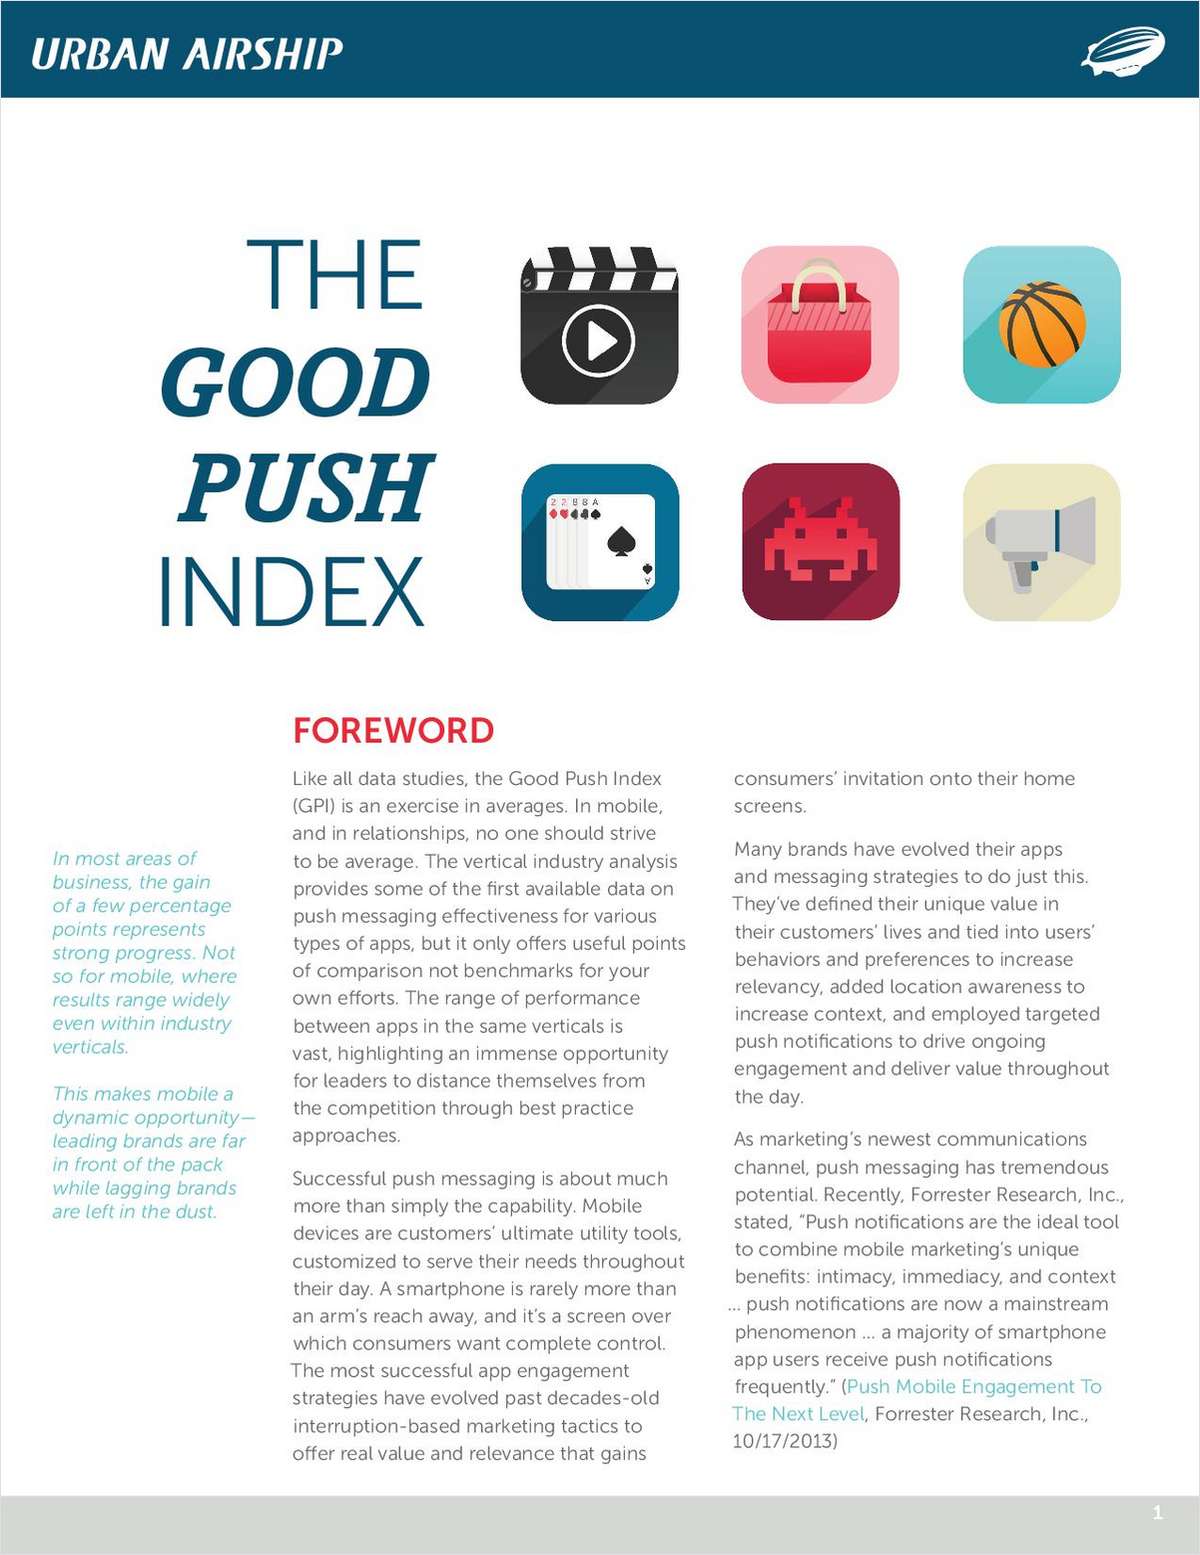 The Good Push Index